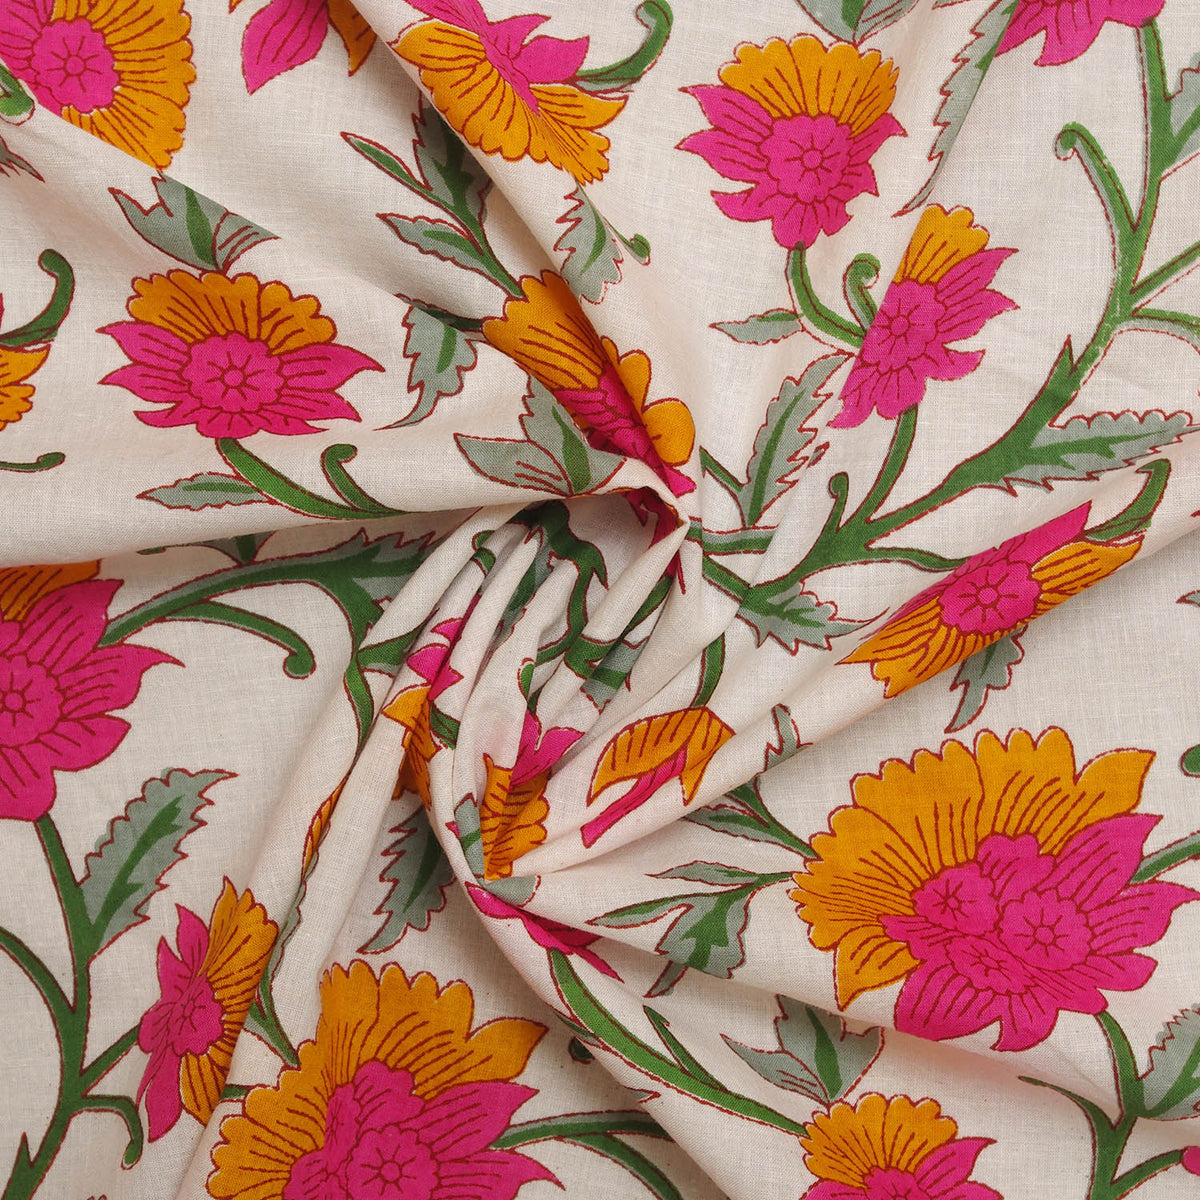 Buy Beautiful Hand Block Printed Cotton Fabric Indian Fabric